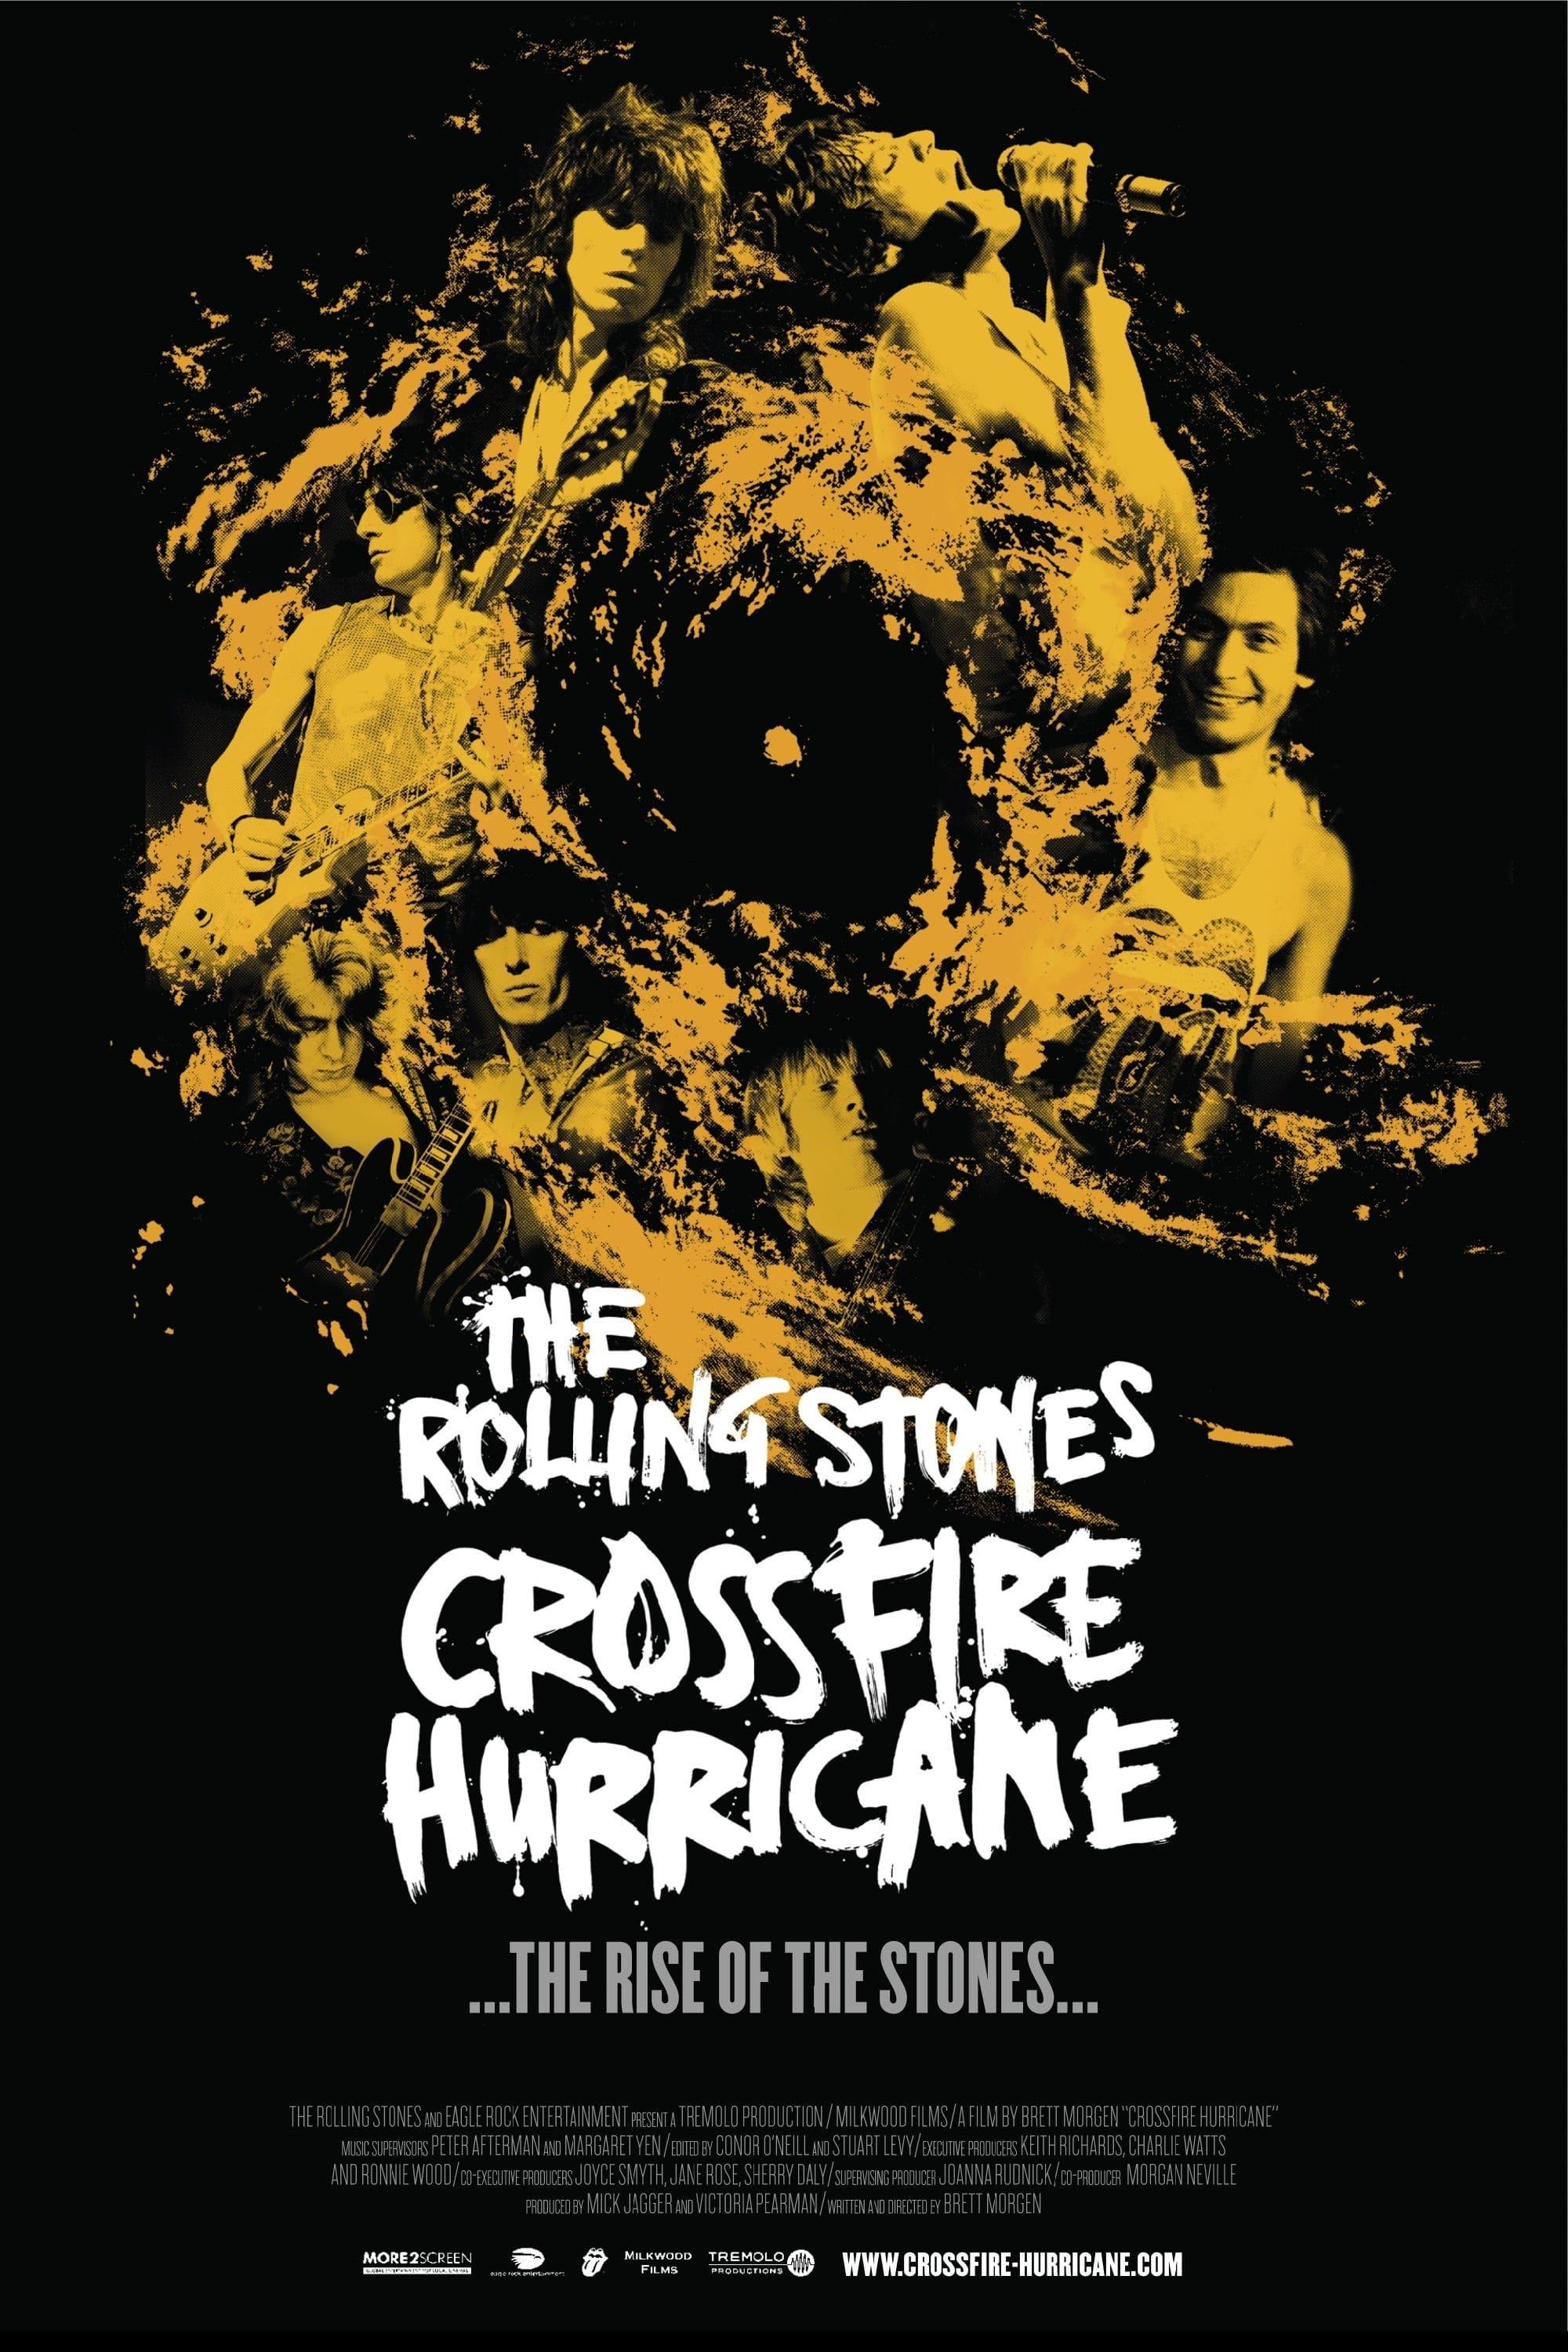 Crossfire Hurricane poster